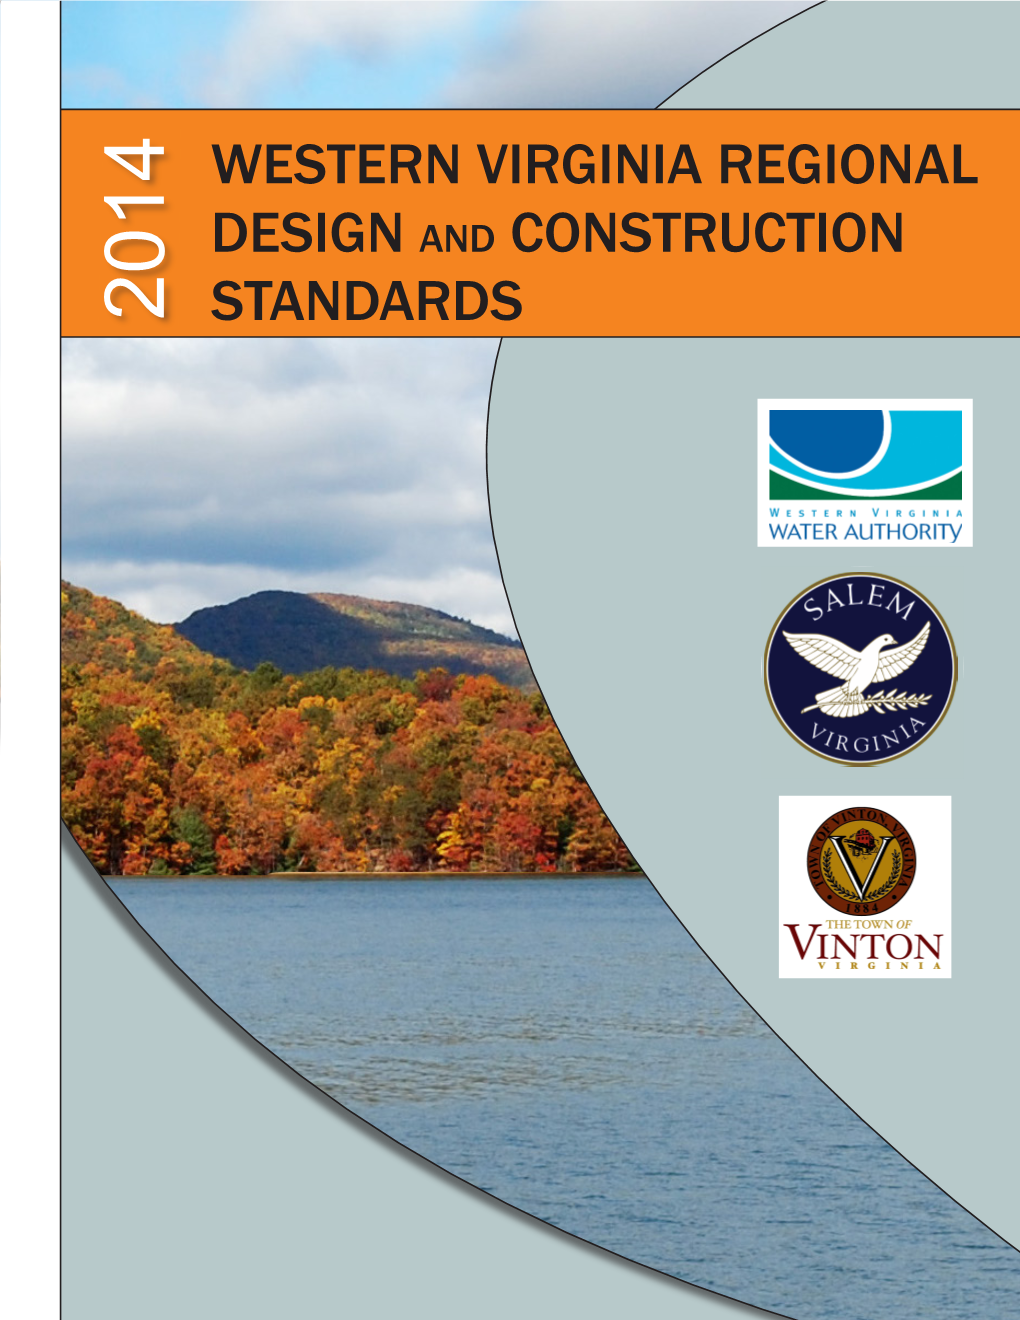 Western Virginia Regional Design and Construction